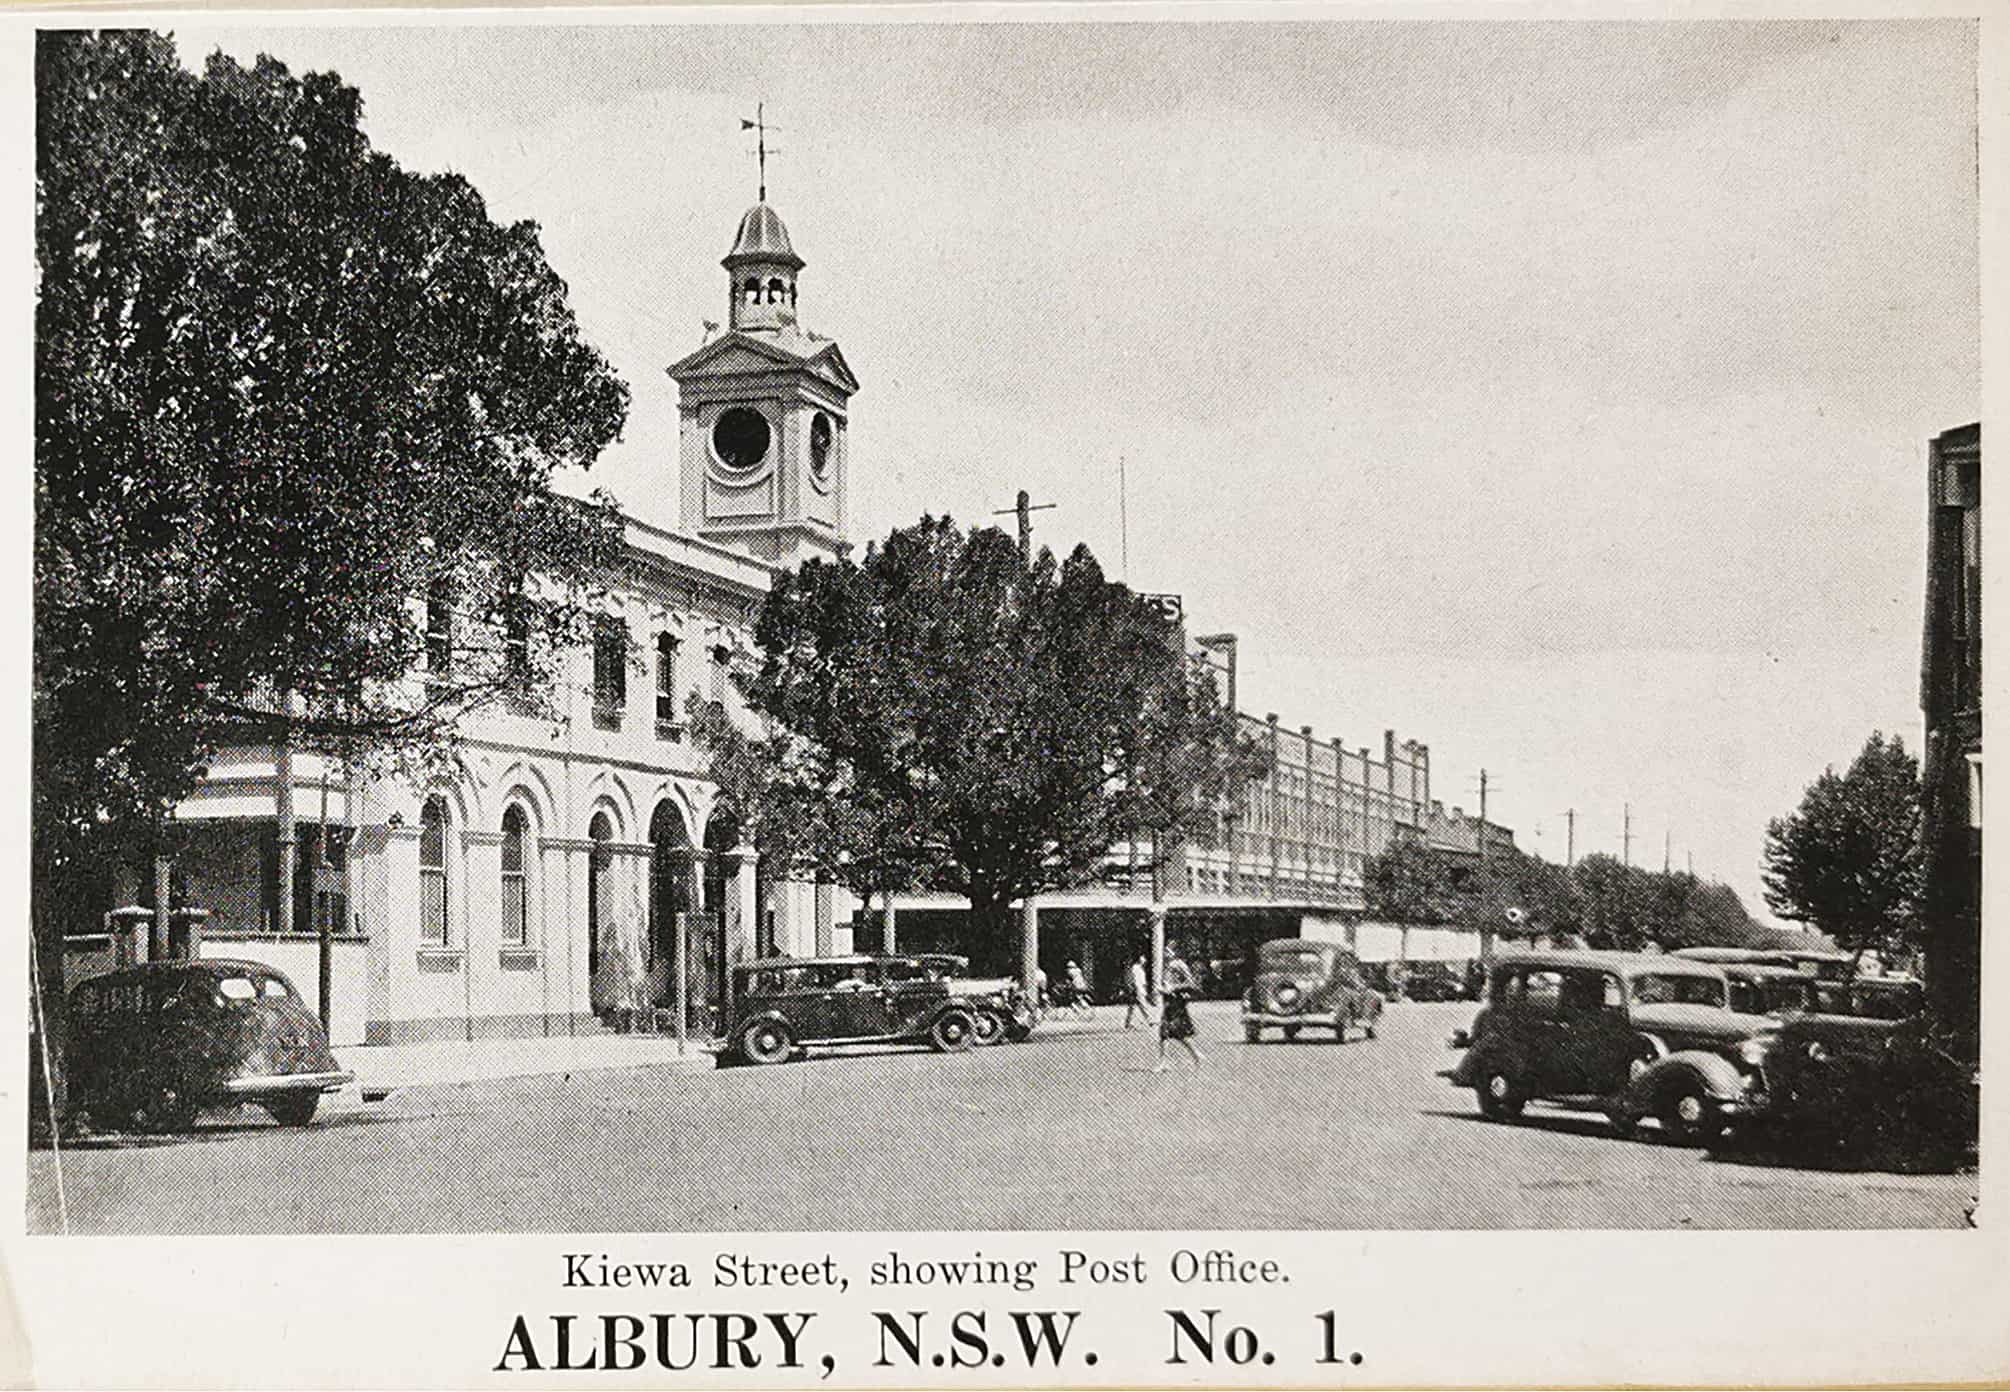 Albury No.1 Photographic Booklet - Vintage Ephemera from 1937